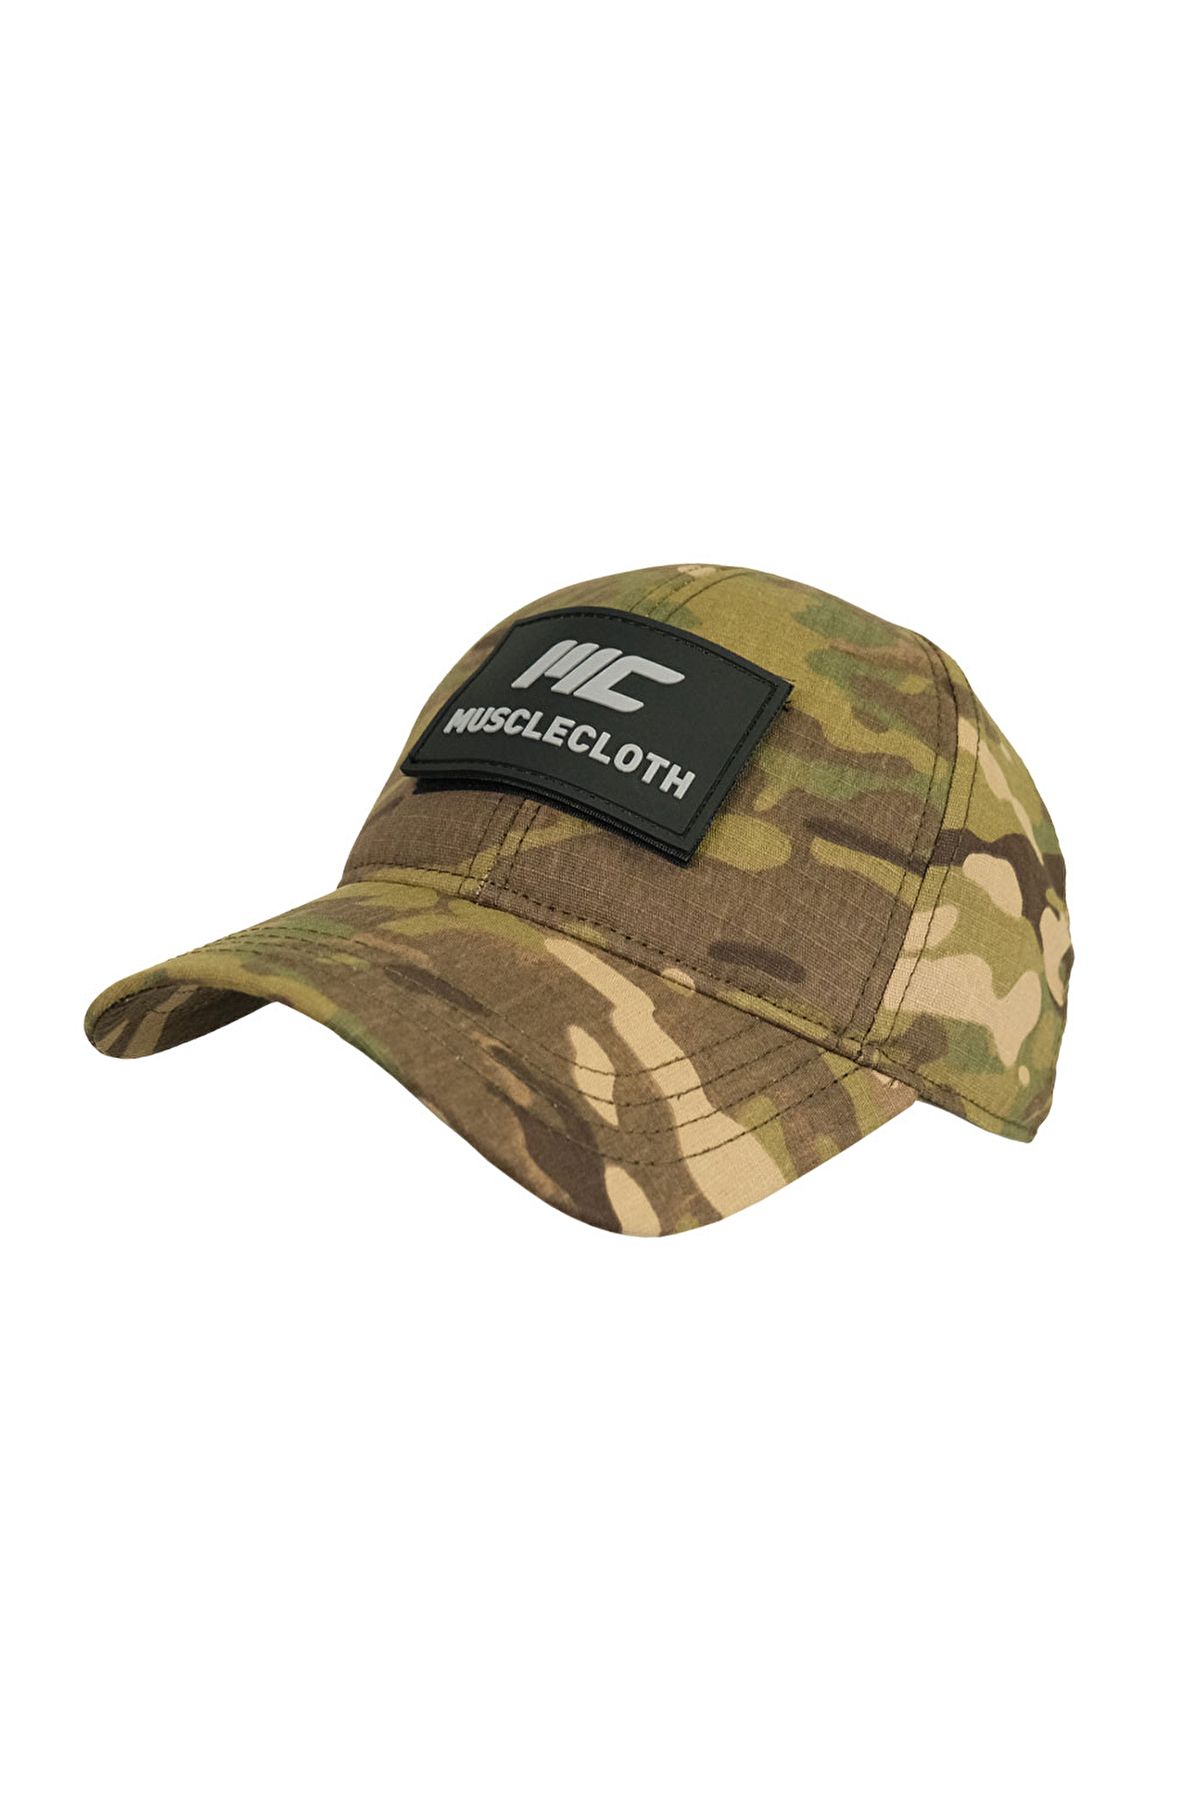 MUSCLECLOTH Tactical Şapka Haki Kamuflaj